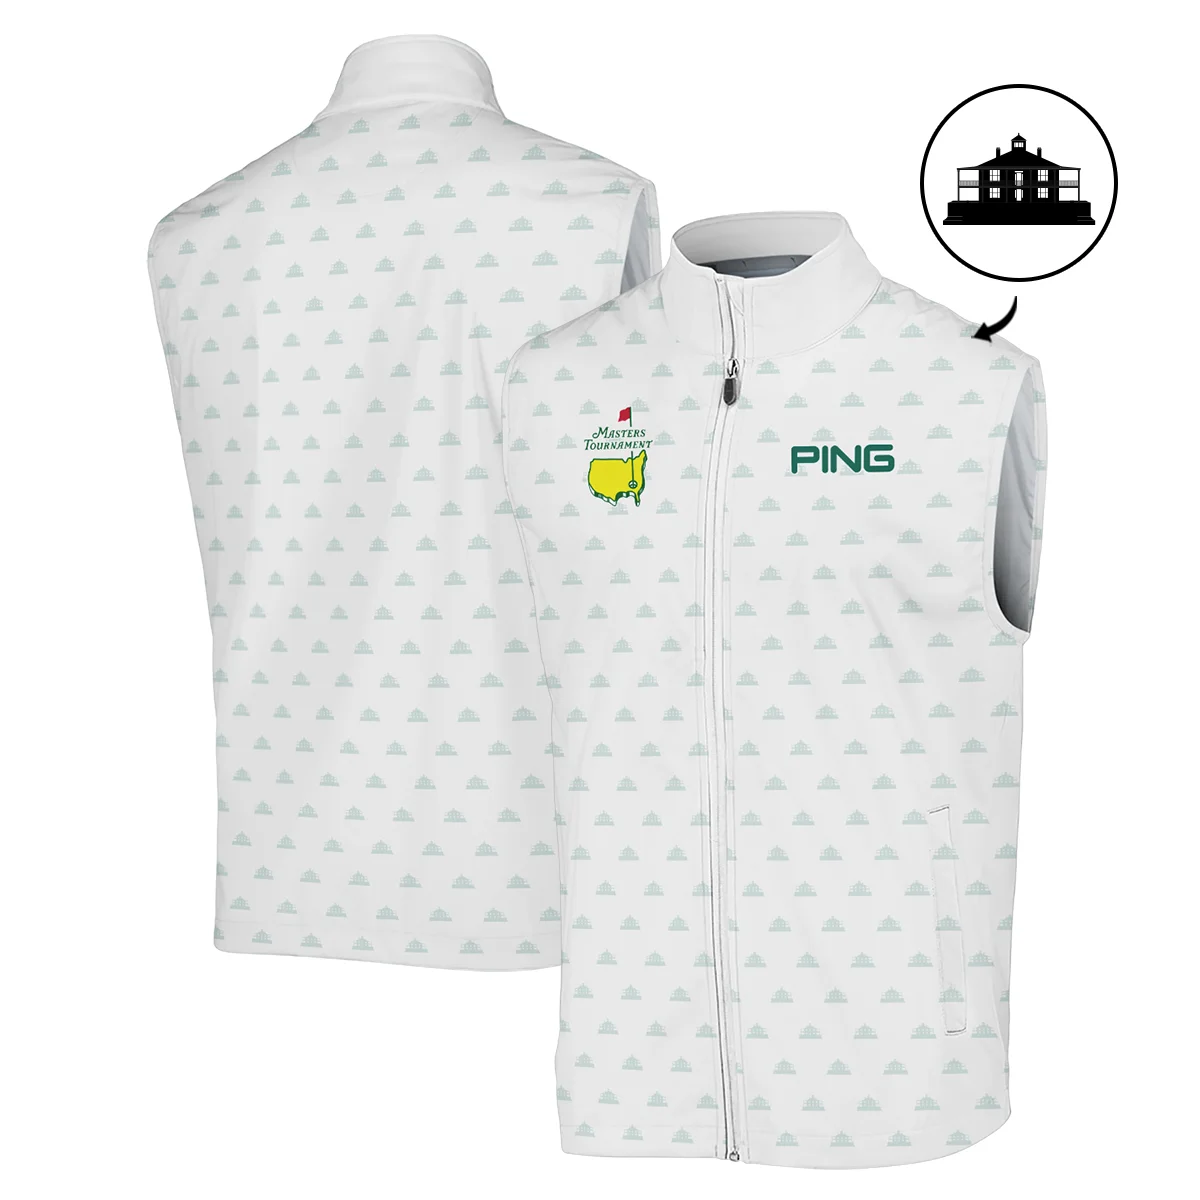 Masters Tournament Golf Sport Ping Zipper Polo Shirt Sports Cup Pattern White Green Zipper Polo Shirt For Men